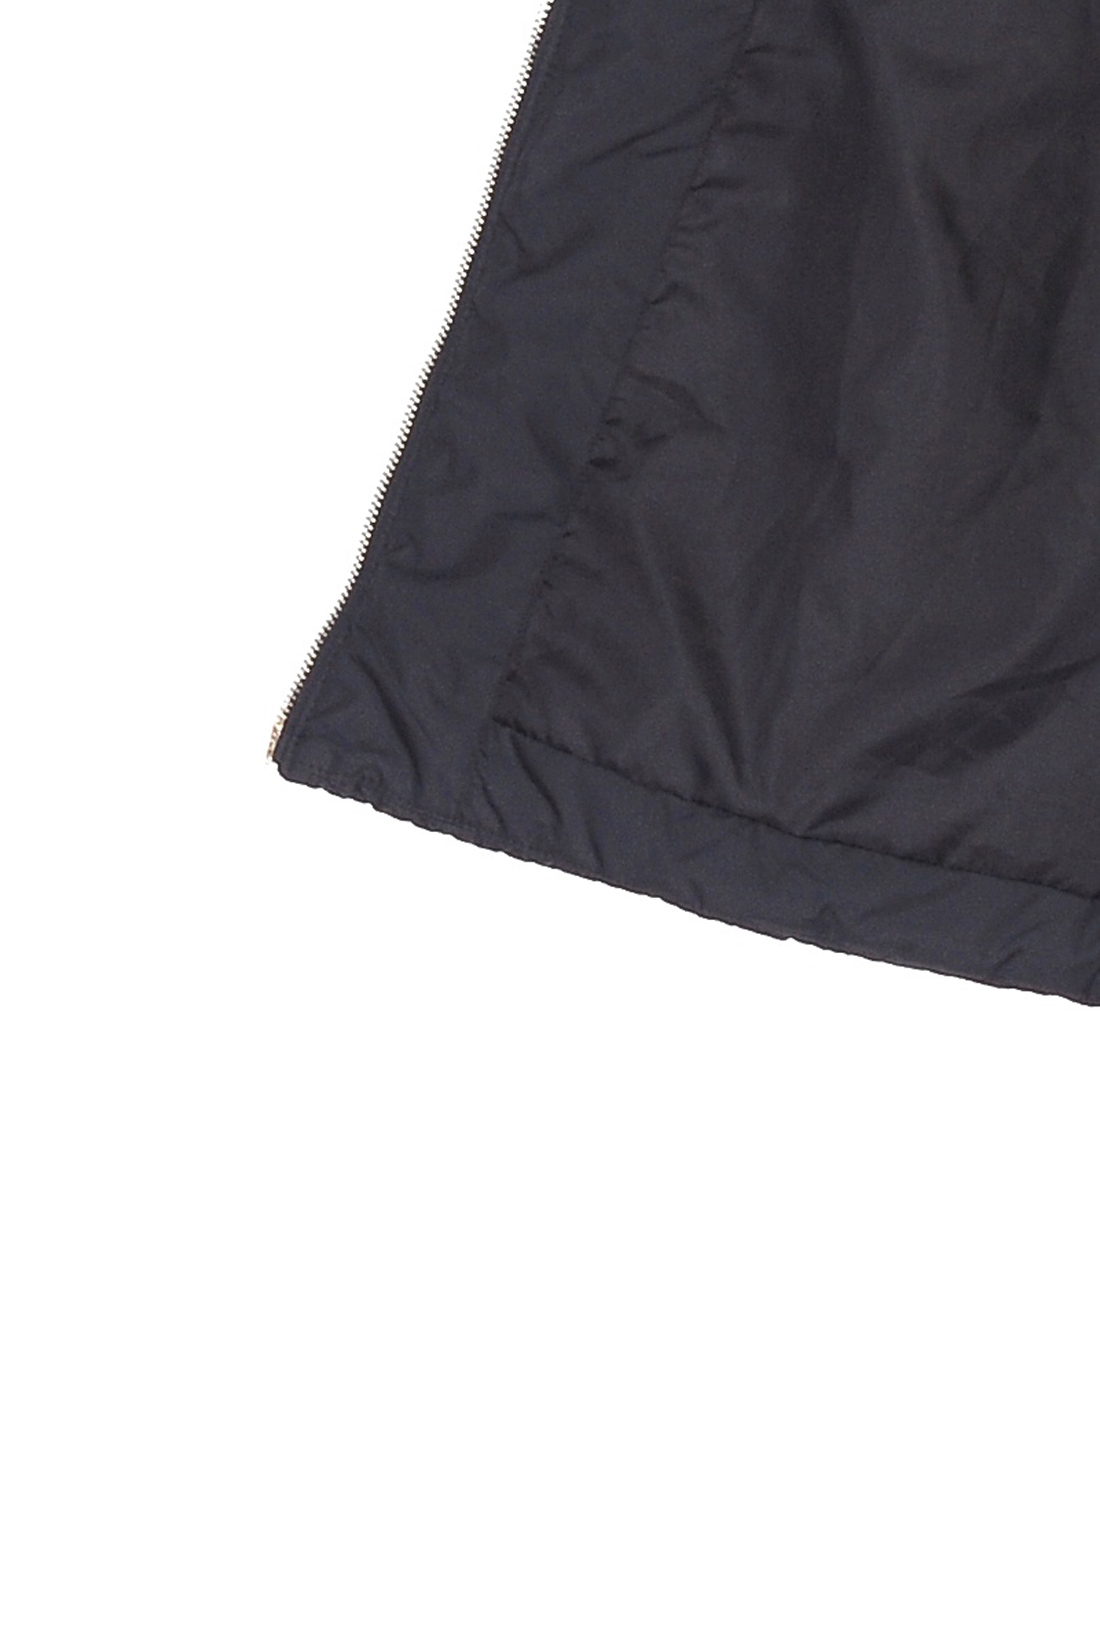 Чёрная куртка с ремешком (арт. baon B039037), размер S, цвет черный Чёрная куртка с ремешком (арт. baon B039037) - фото 3